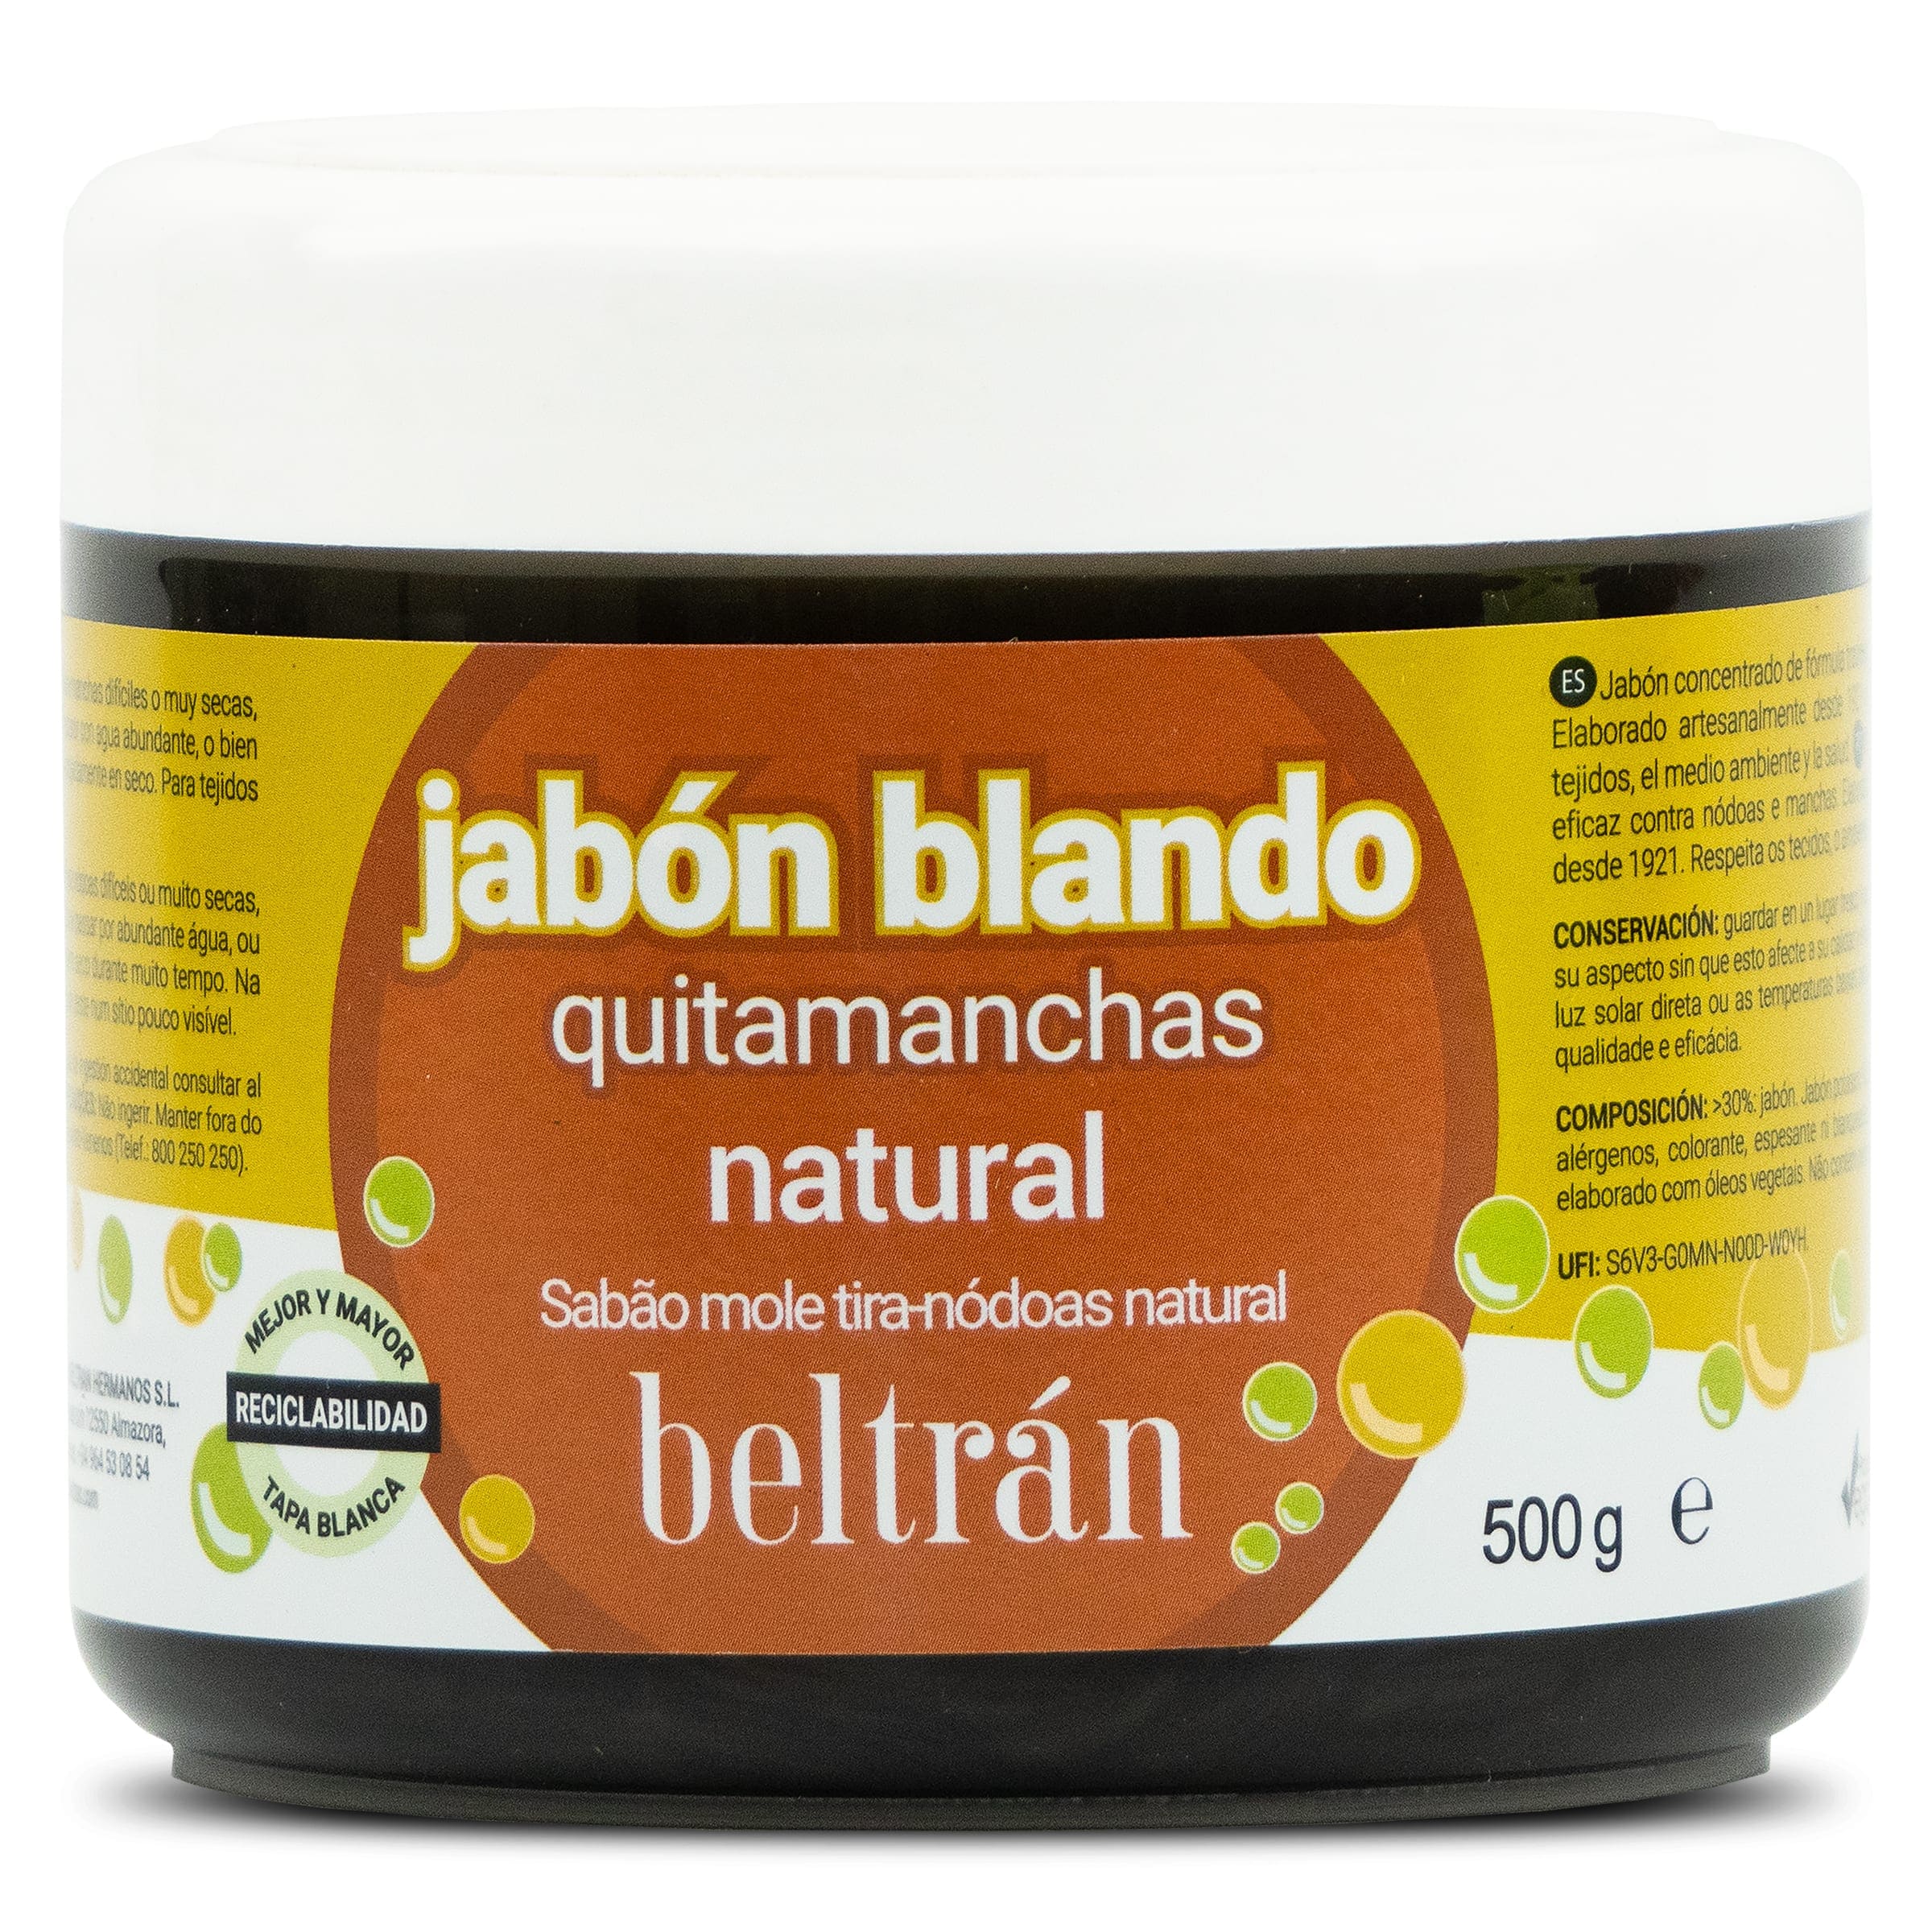 Beltran Jabón blando quitamanchas Reviews